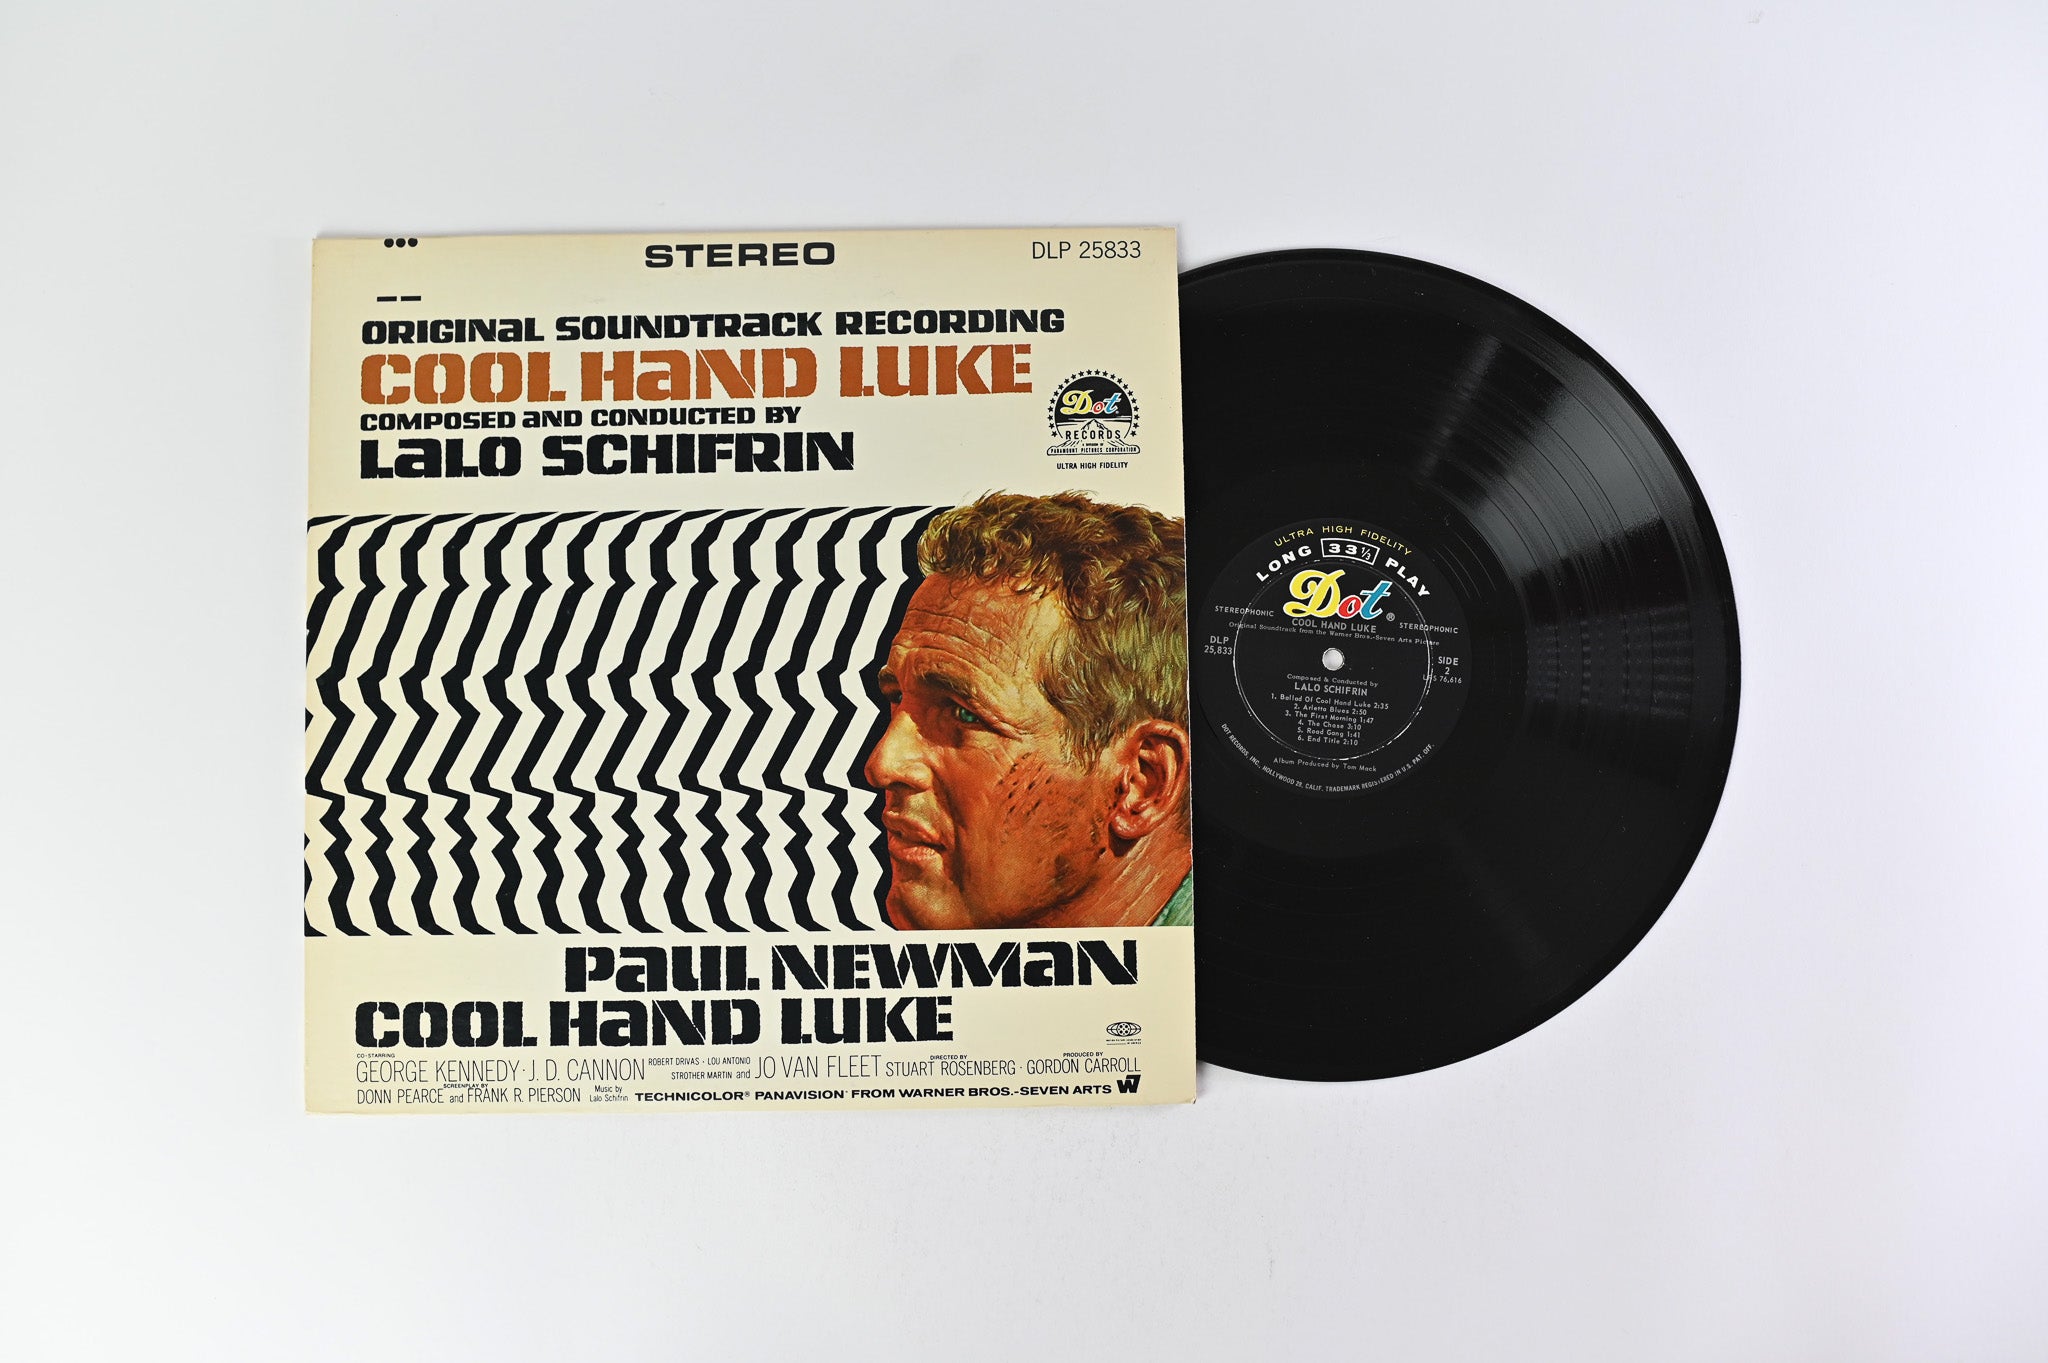 Lalo Schifrin - Cool Hand Luke - Original Soundtrack Recording on Dot Records